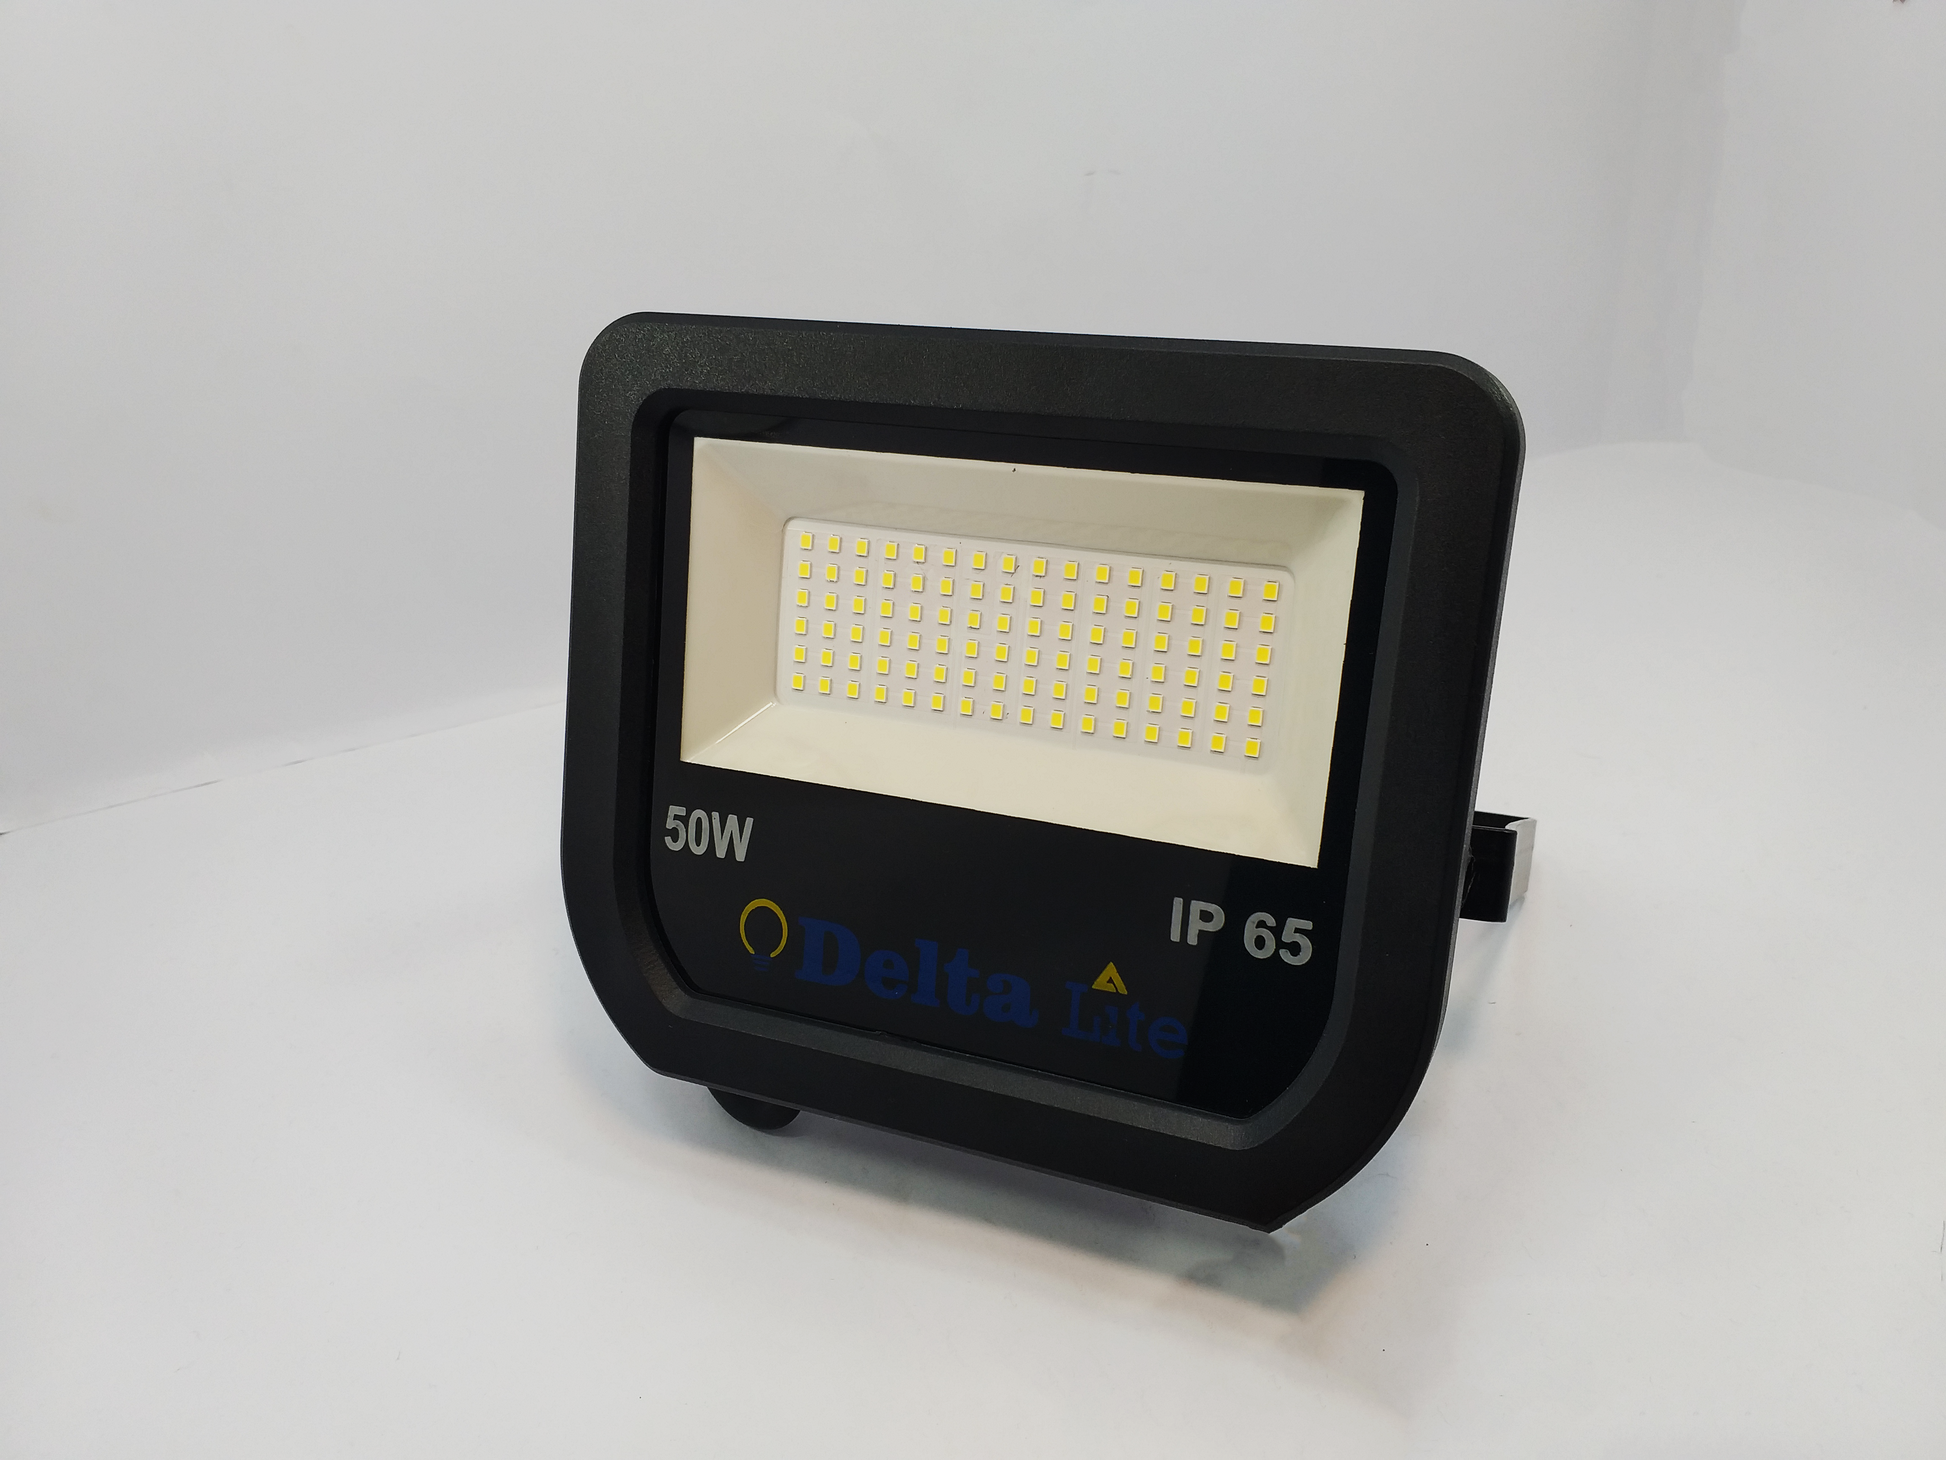 Deltalite LED Flood Light 50 Watt IP65 Water Proof